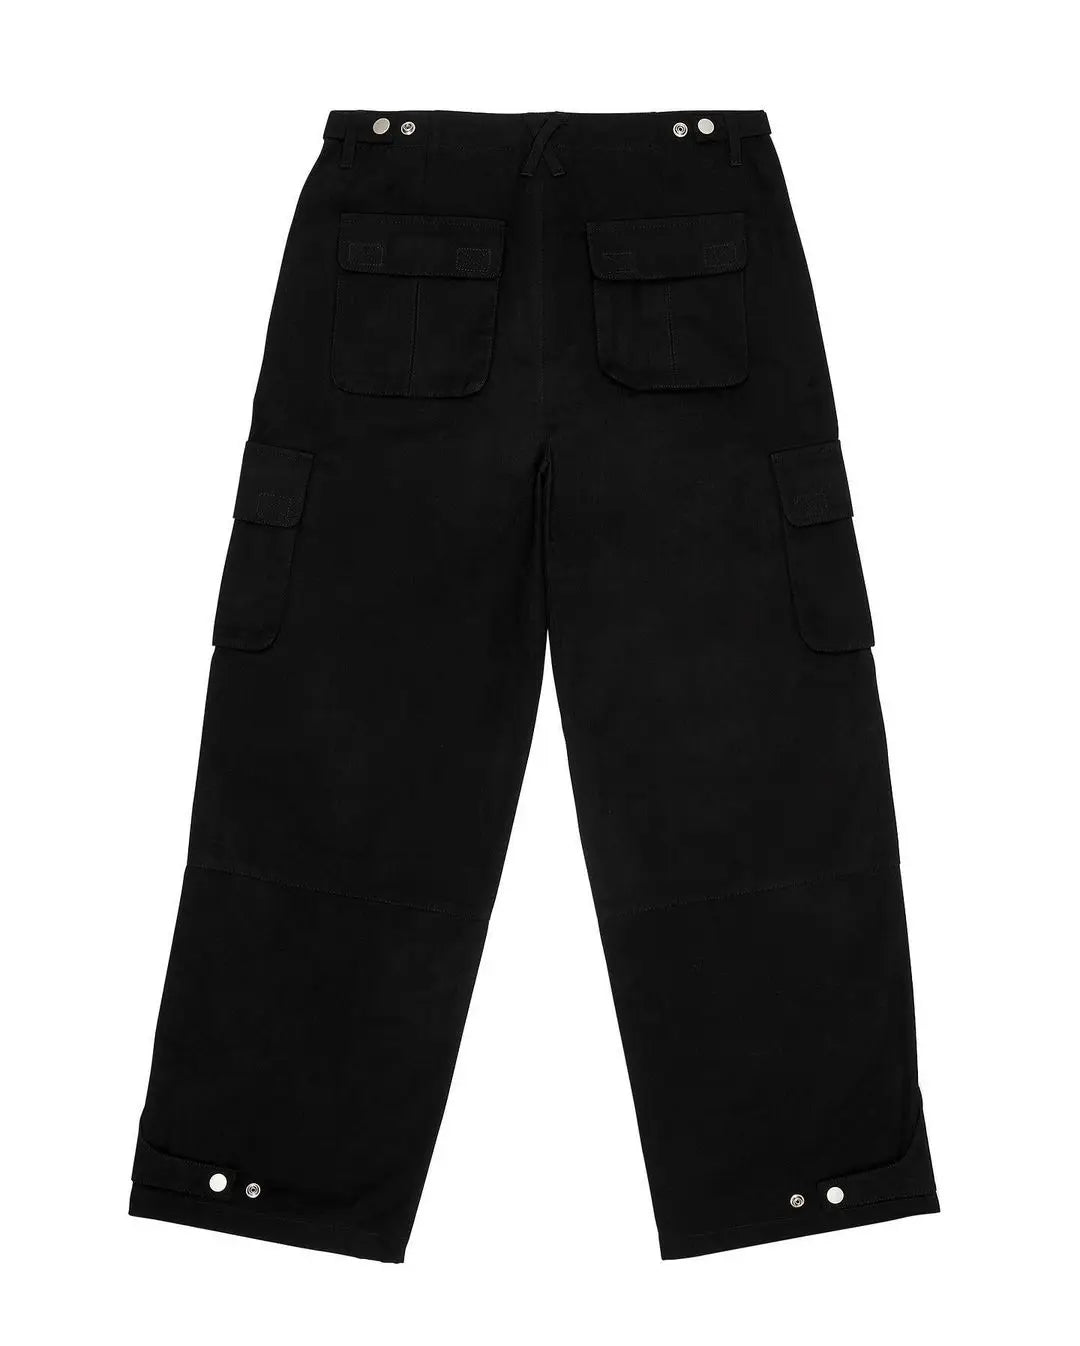 Rhinestone Skull Full Length Gothic Black Pants Women Clothing Baggy Jeans Streetwear Women High Waist Hip Hop Y2k Pants